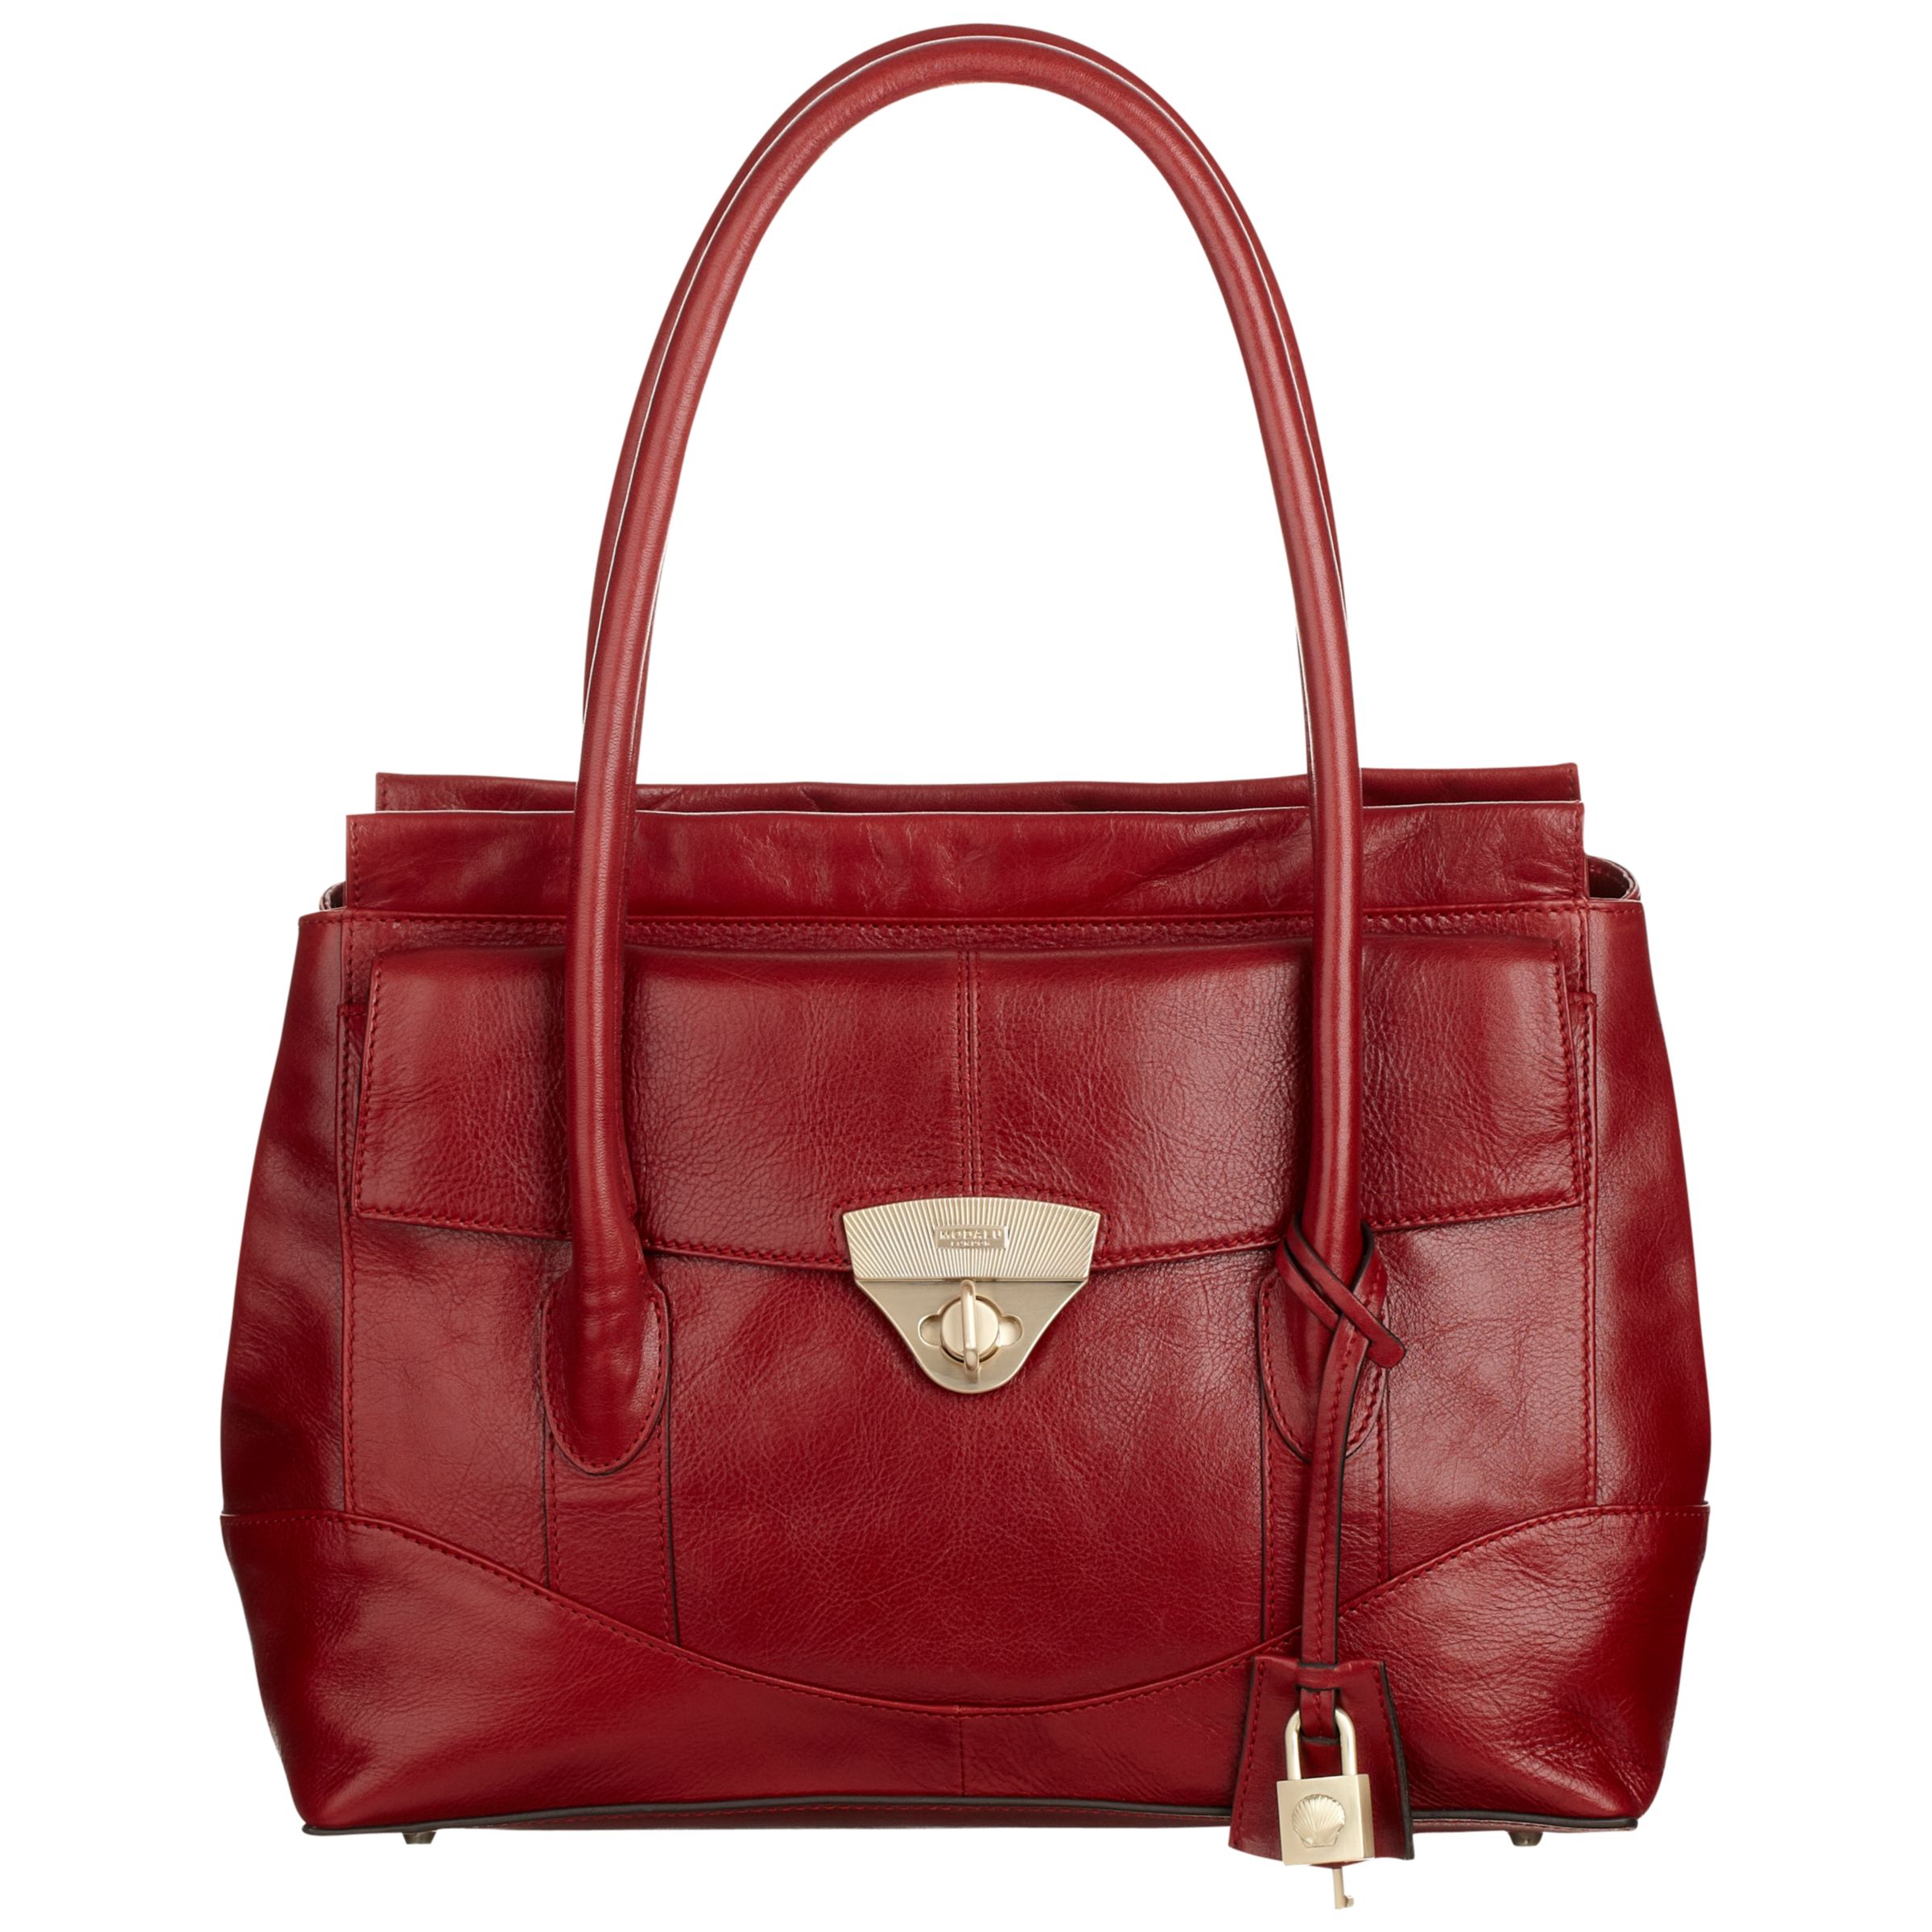 Modalu Millie Medium Shoulder Handbag,White